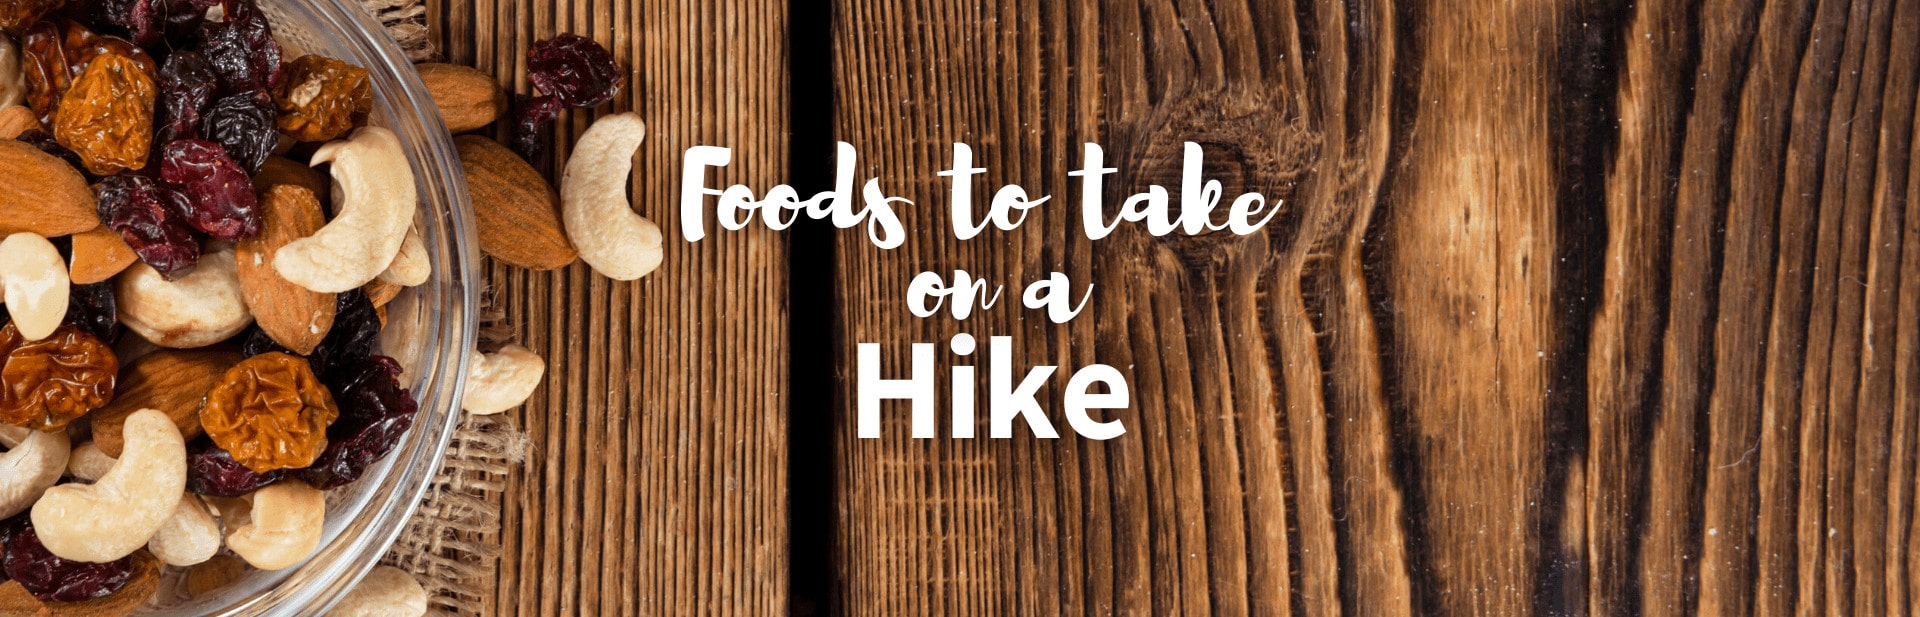 Food to Take on a Hike: Top 10 Trail Snacks